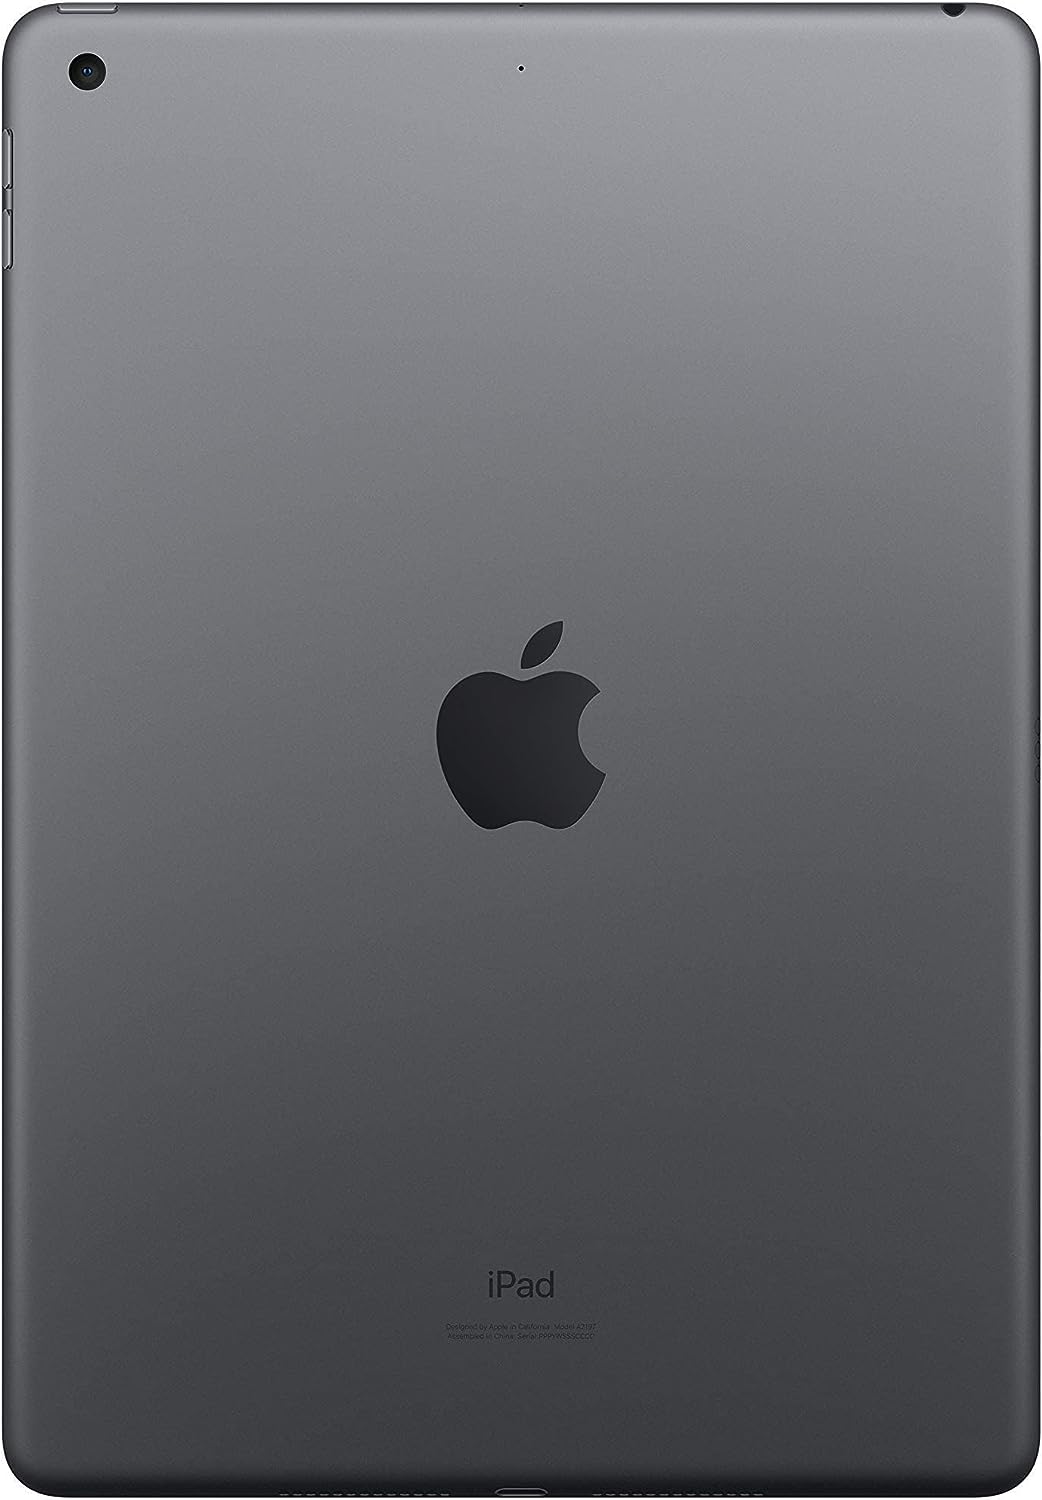 Apple iPad 6th Gen Tablet - Space Grey - Wi-Fi Only - 128GB Storage